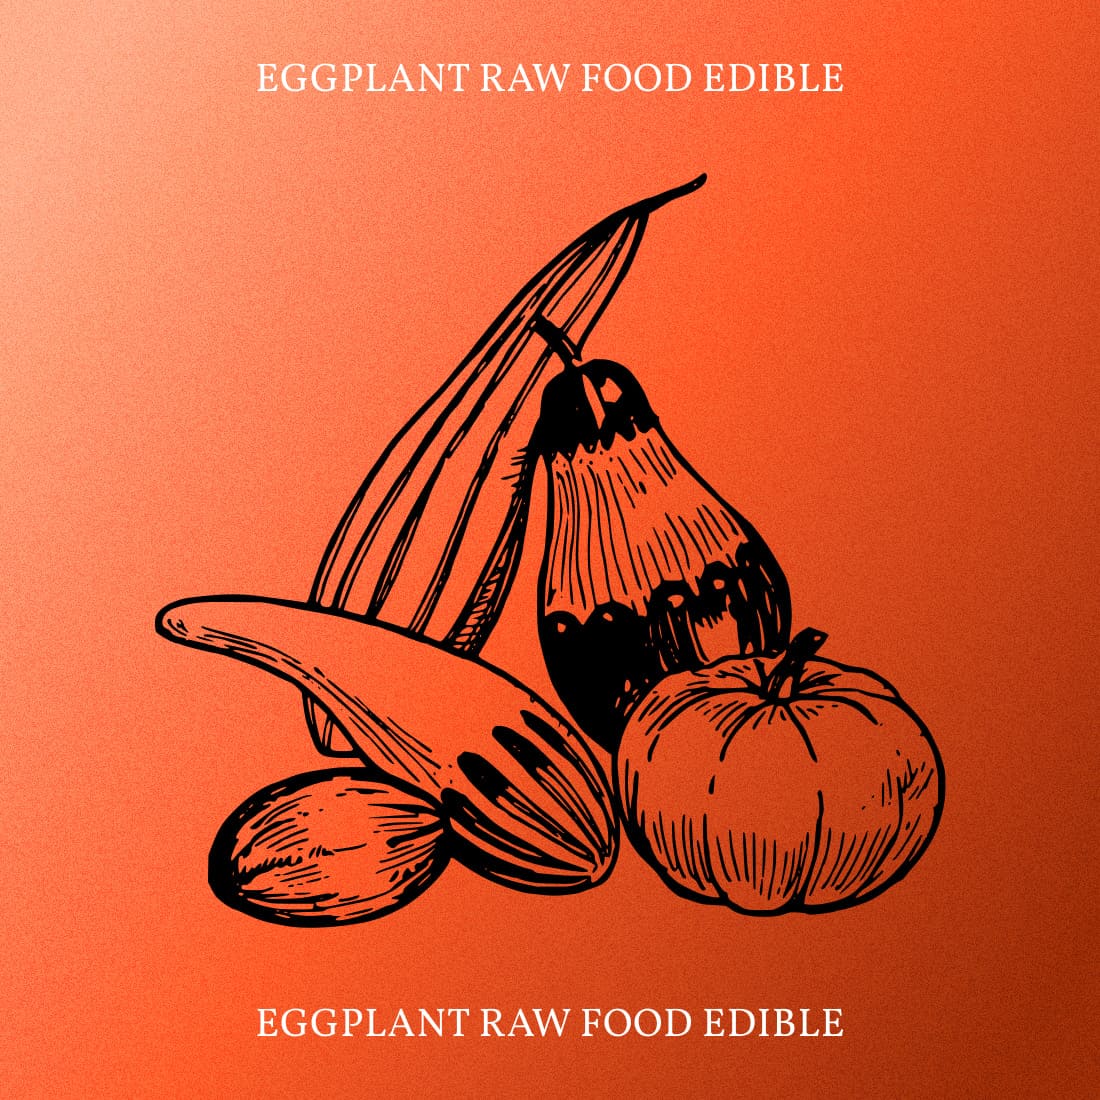 Eggplant Raw Food Edible - Orange Colorful Image.